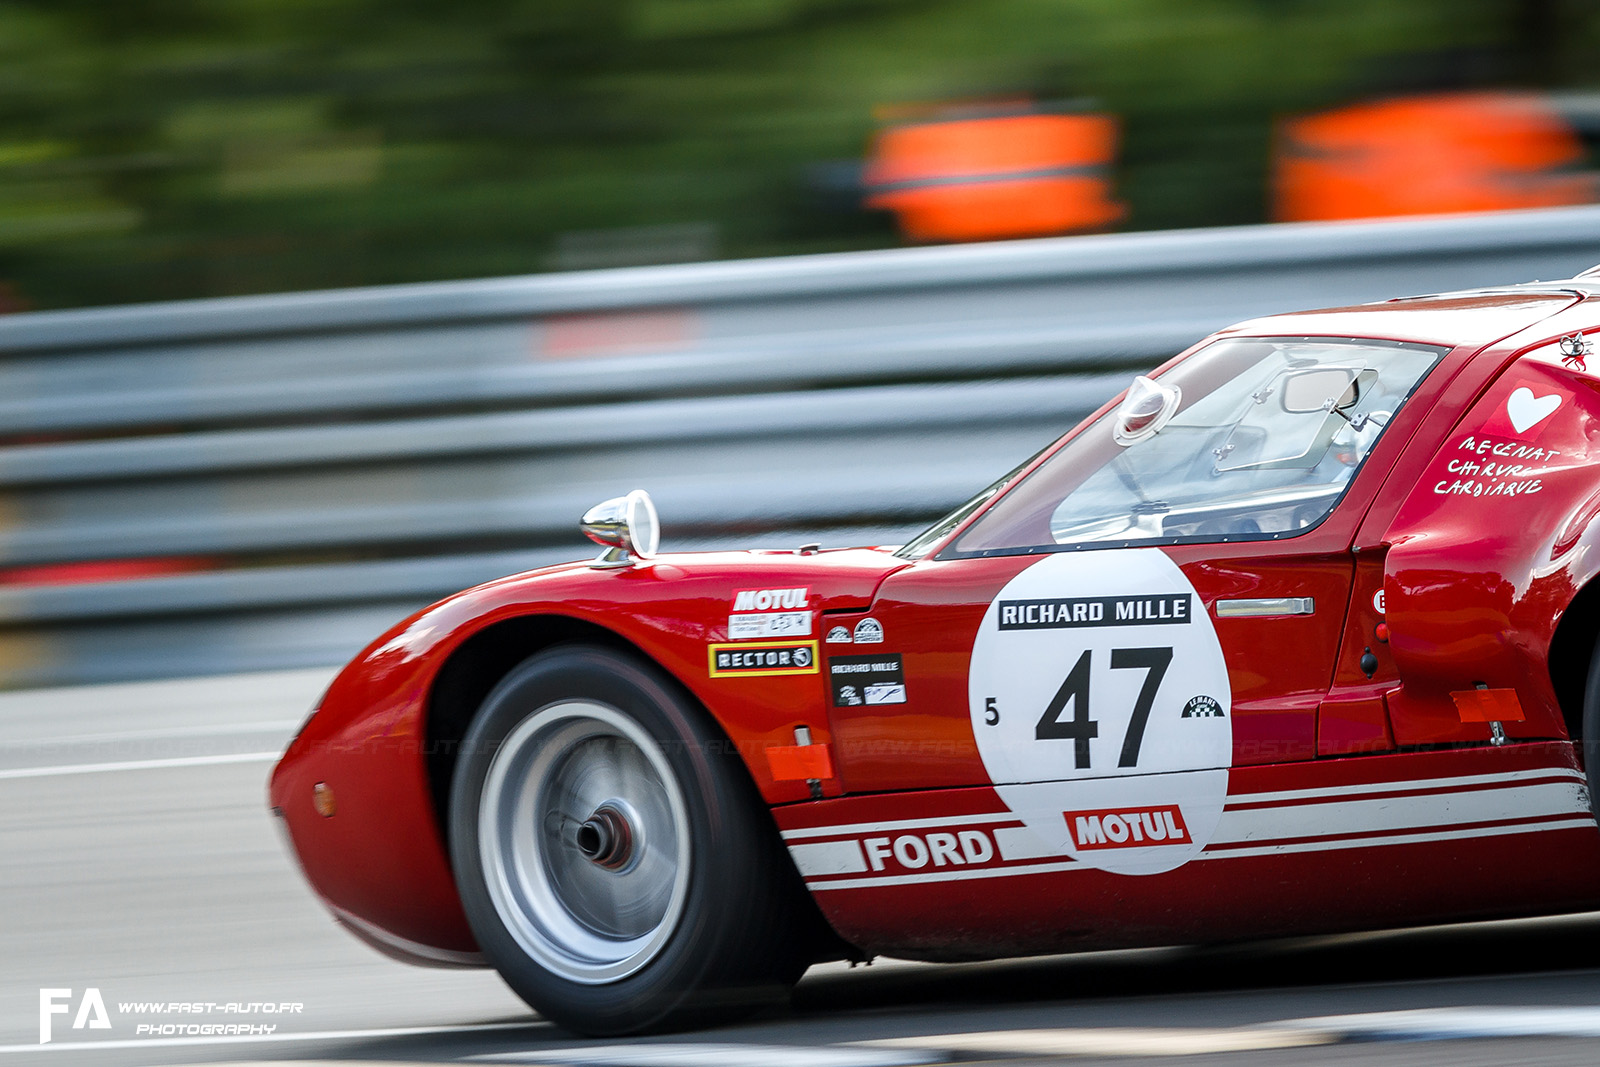 2-le-manc-classic-2014-ford-gt40-track.jpg